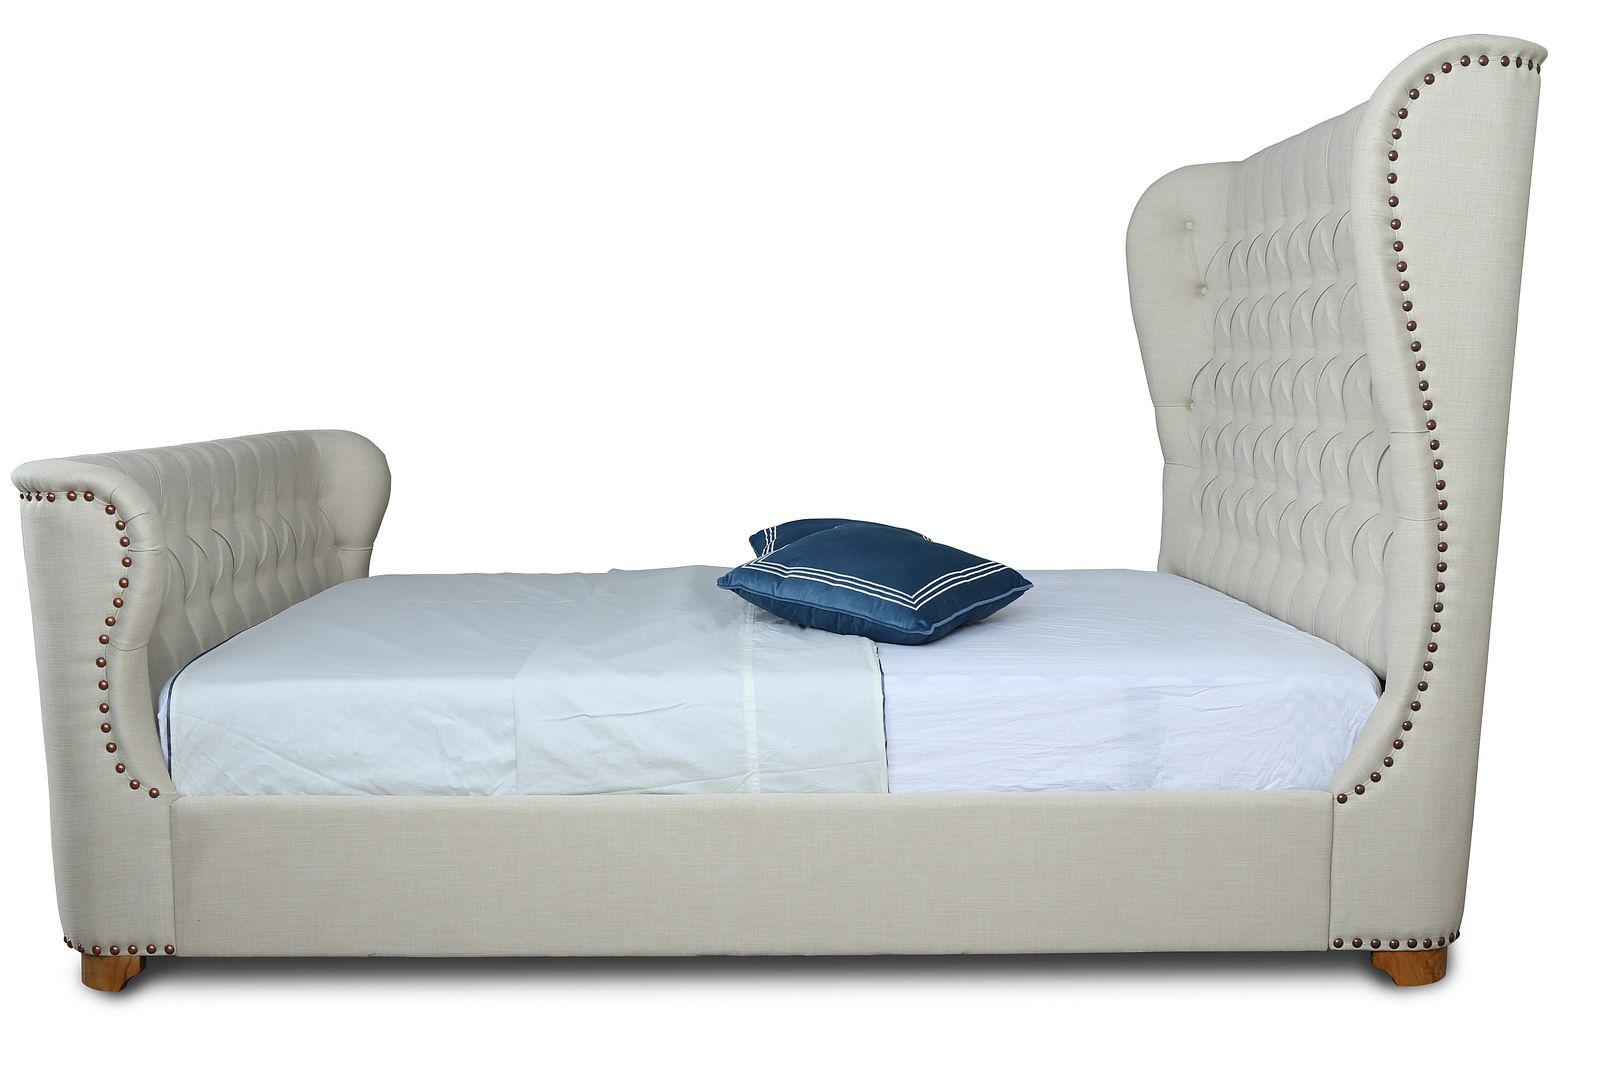 Lola Linen Upholstered Platform Bed Frame - East Shore Modern Home Furnishings